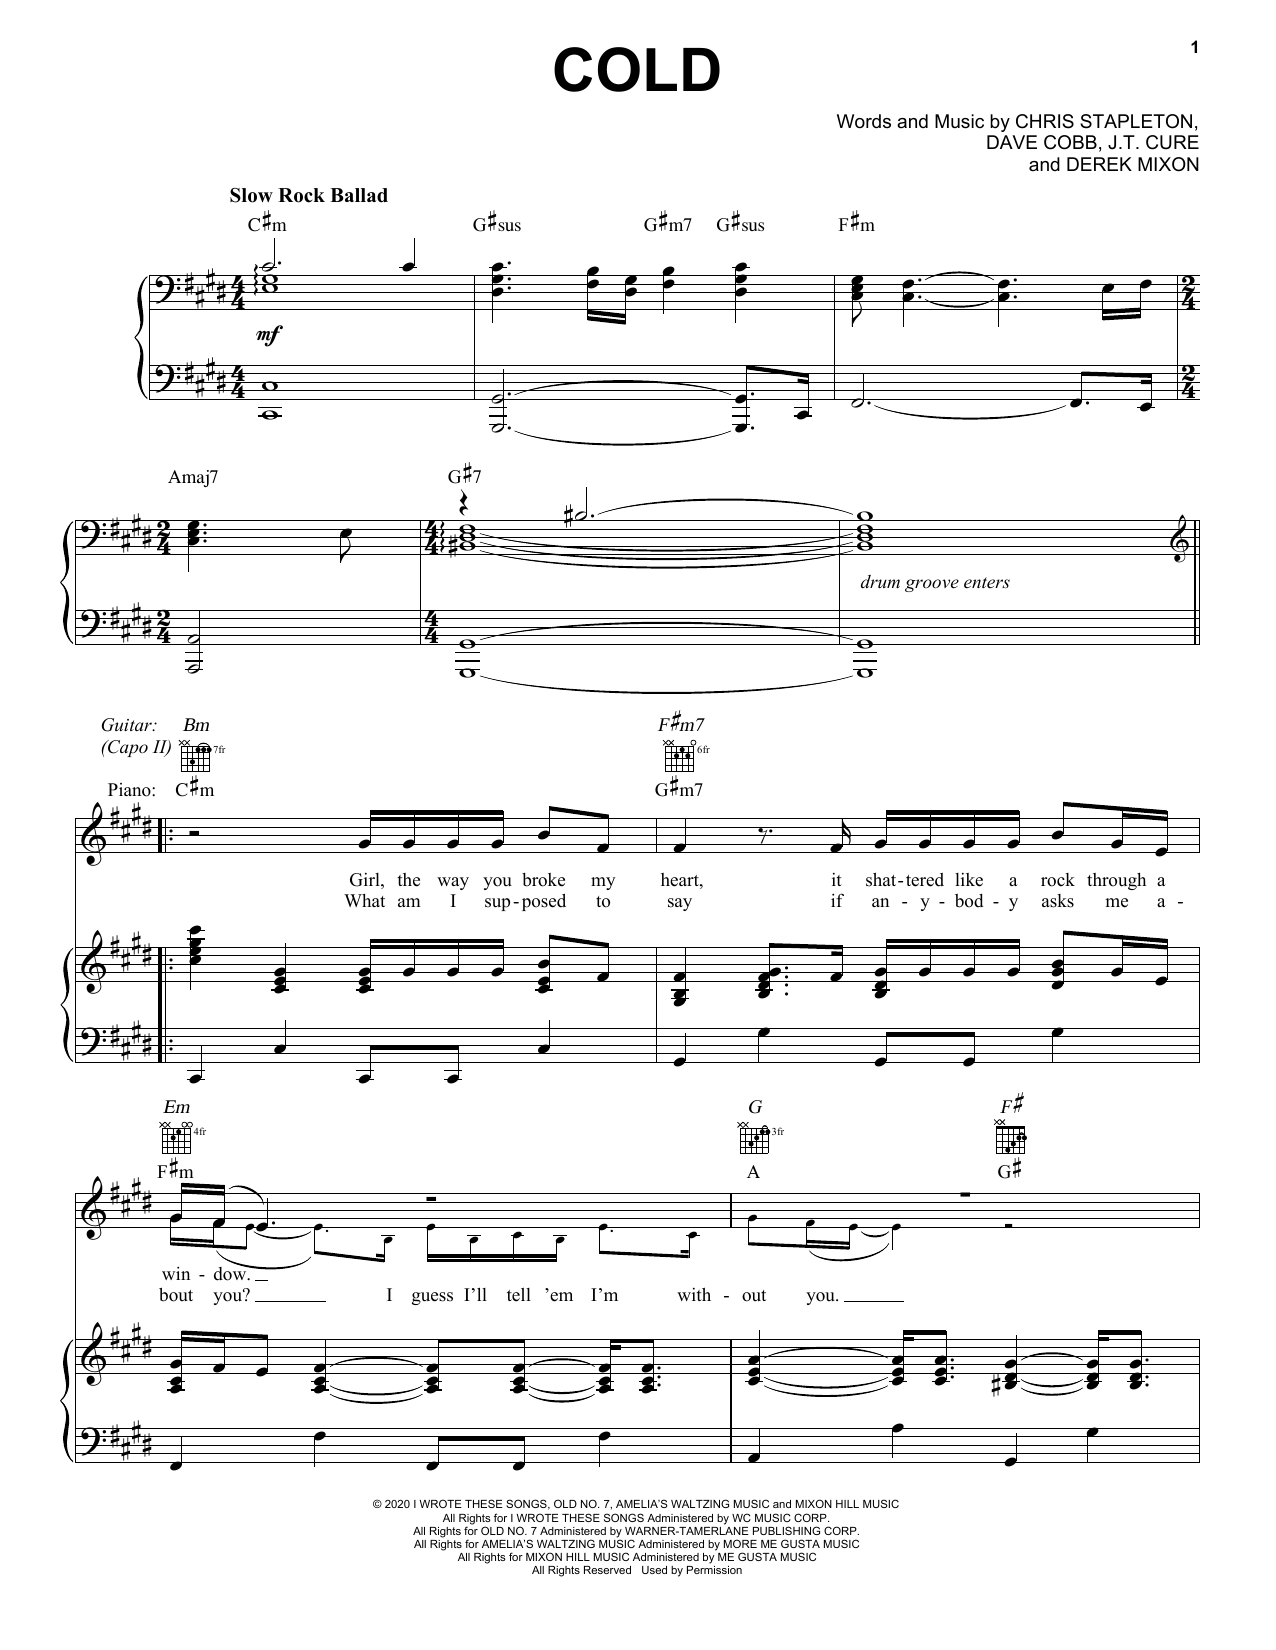 Chris Stapleton Cold Sheet Music Notes & Chords for Guitar Chords/Lyrics - Download or Print PDF